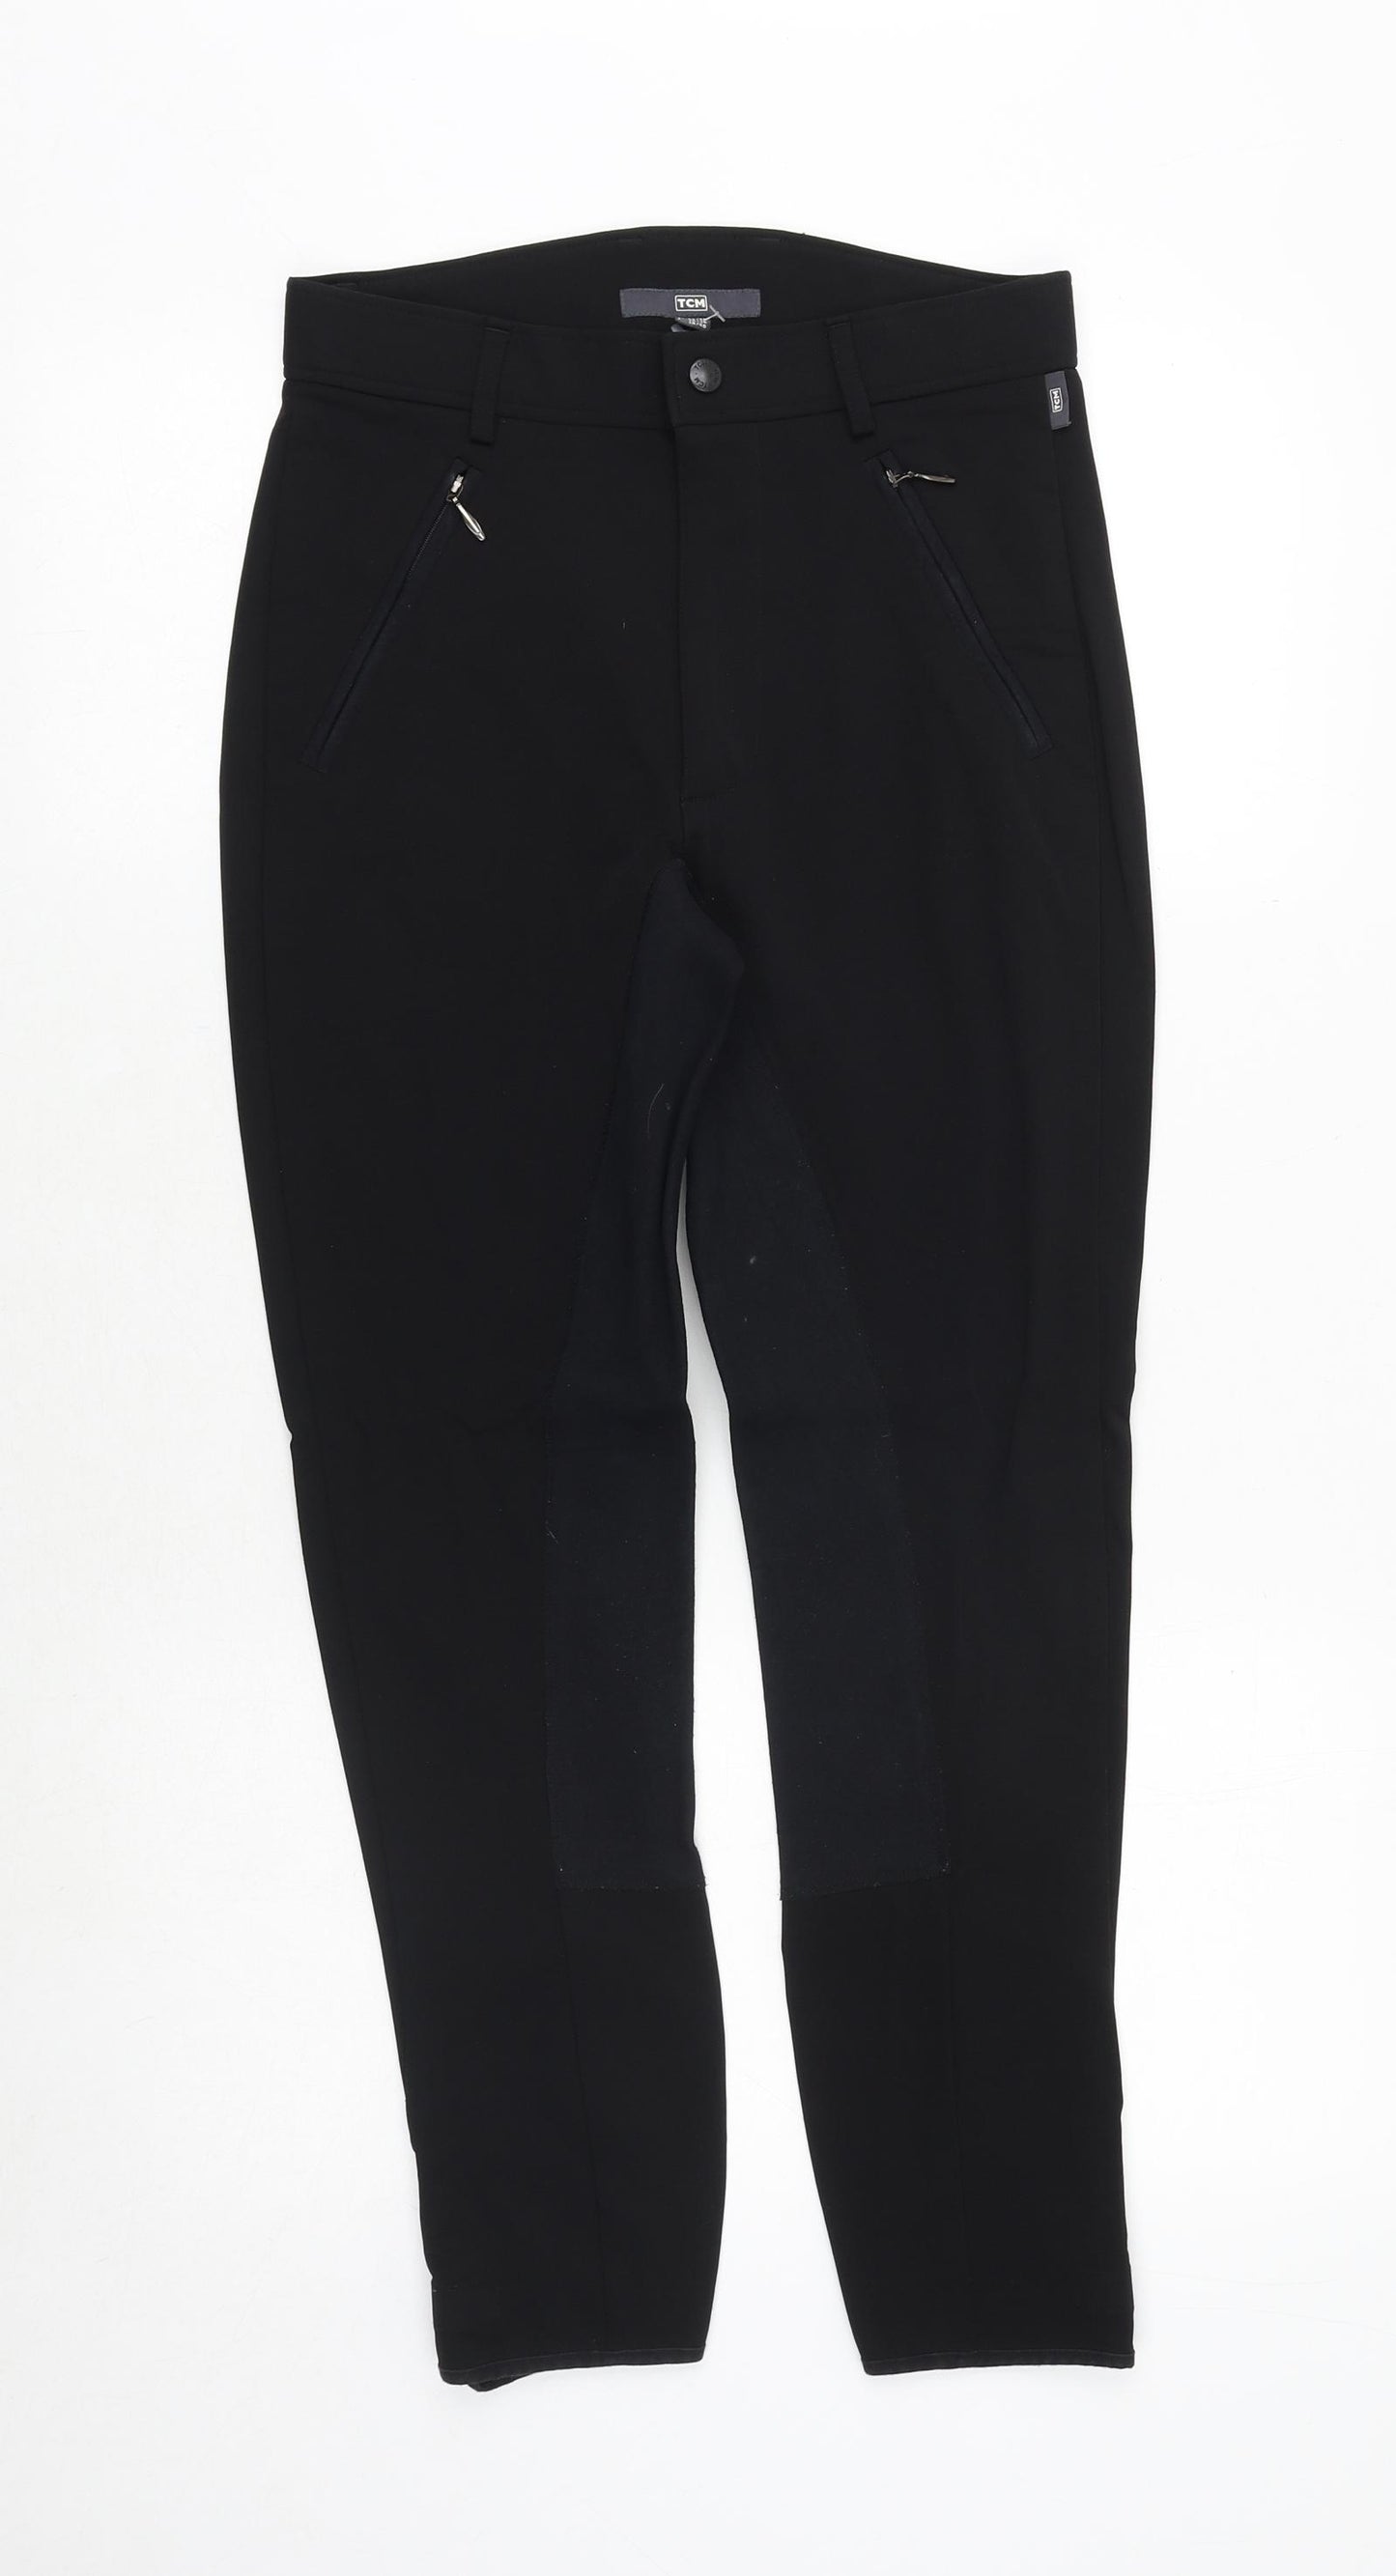 TCM Womens Black Polyamide Trousers Size 8 Regular Zip - Zipped Pockets